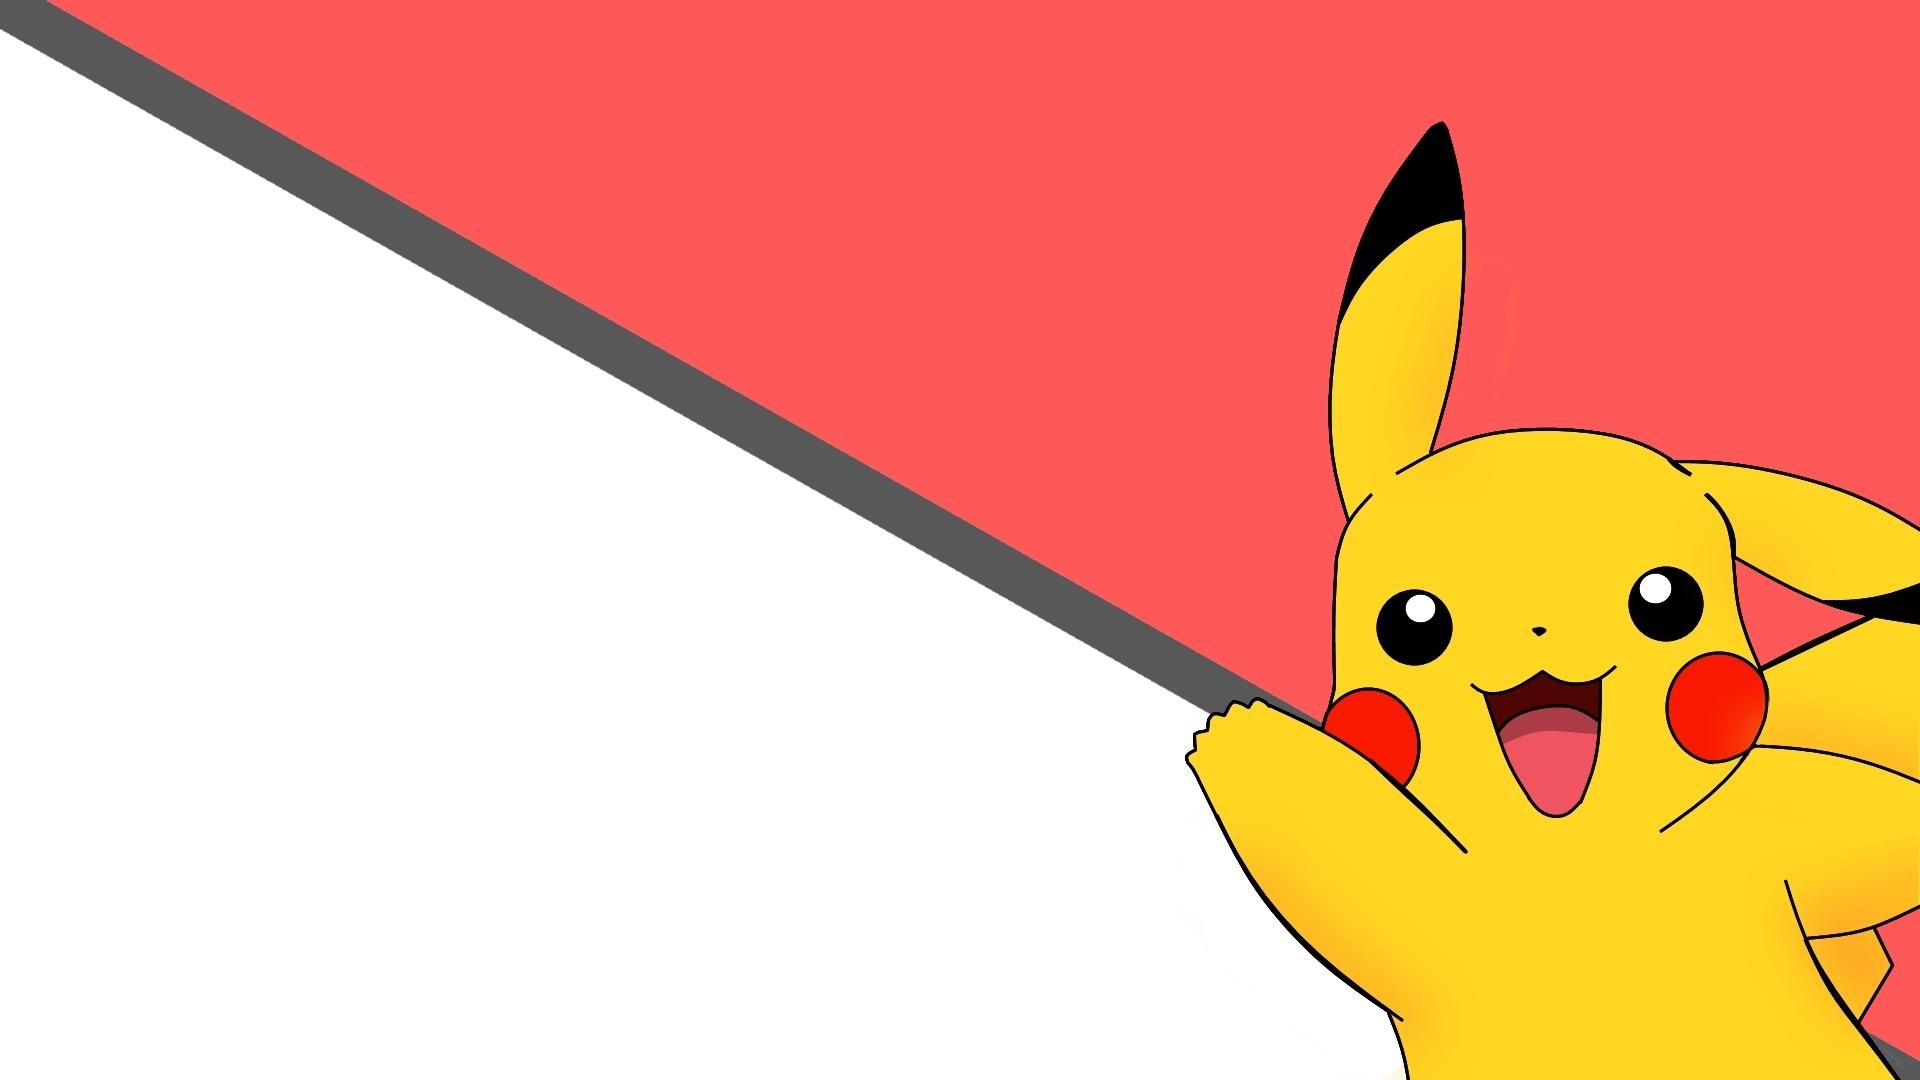 Pokemon Pikachu Art Wallpaper, HD Cartoon 4K Wallpapers, Images, Photos and  Background - Wallpapers Den